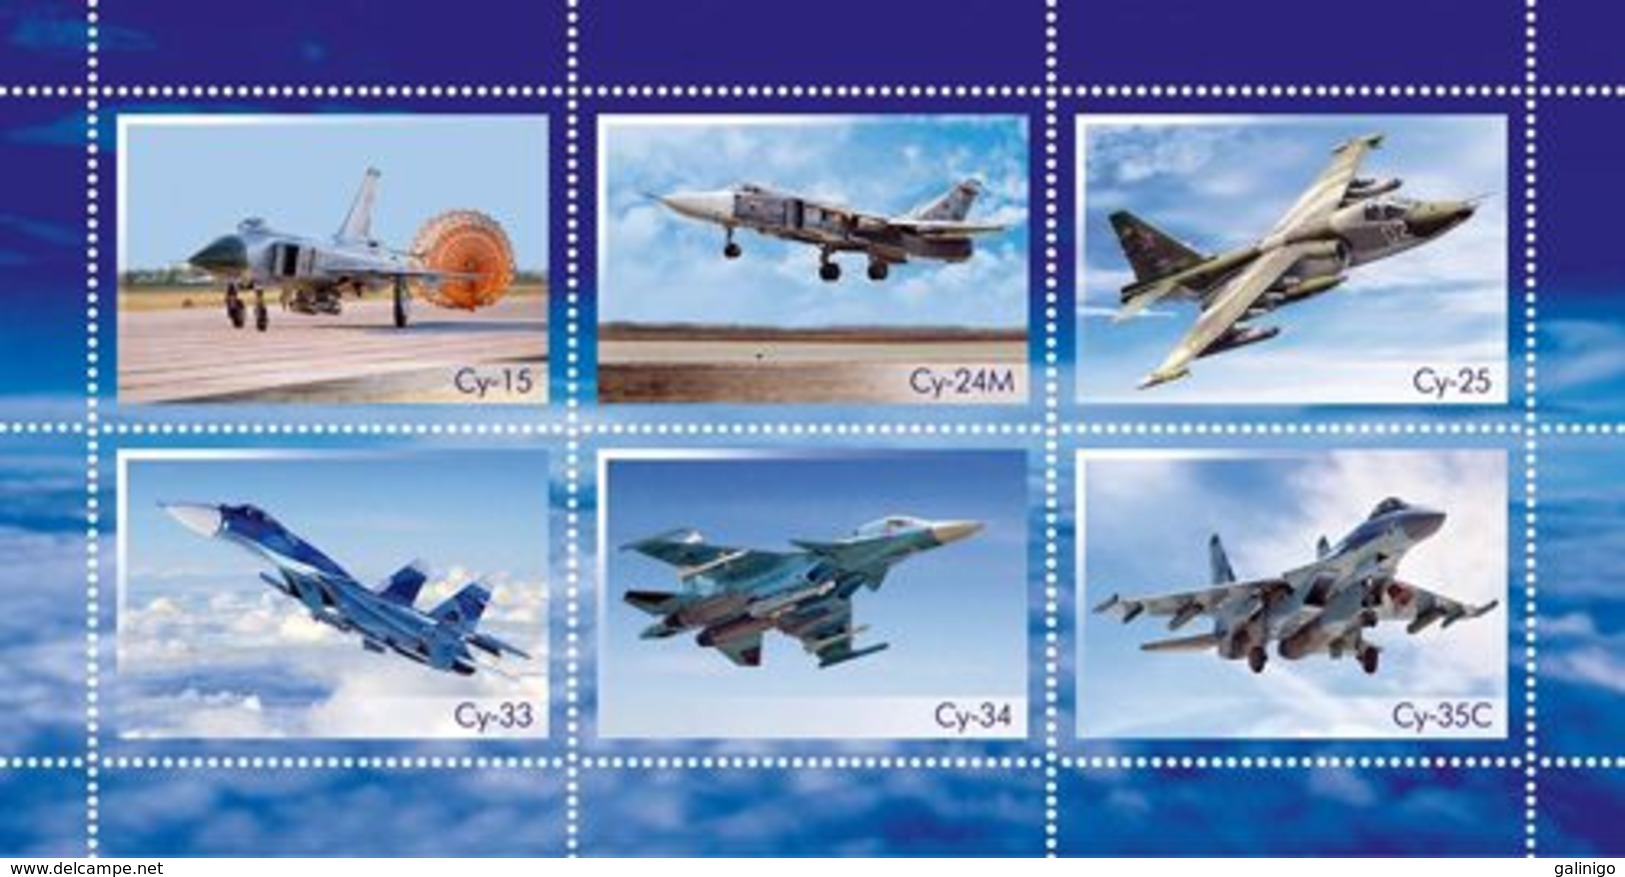 2020-2668-2672  Russia Souvenir Pack -1009 (S/S,FDC,Rare Vignette)  P.O.Sukhoi , Aircraft Designer.Aviation:Airplanes - Nuovi